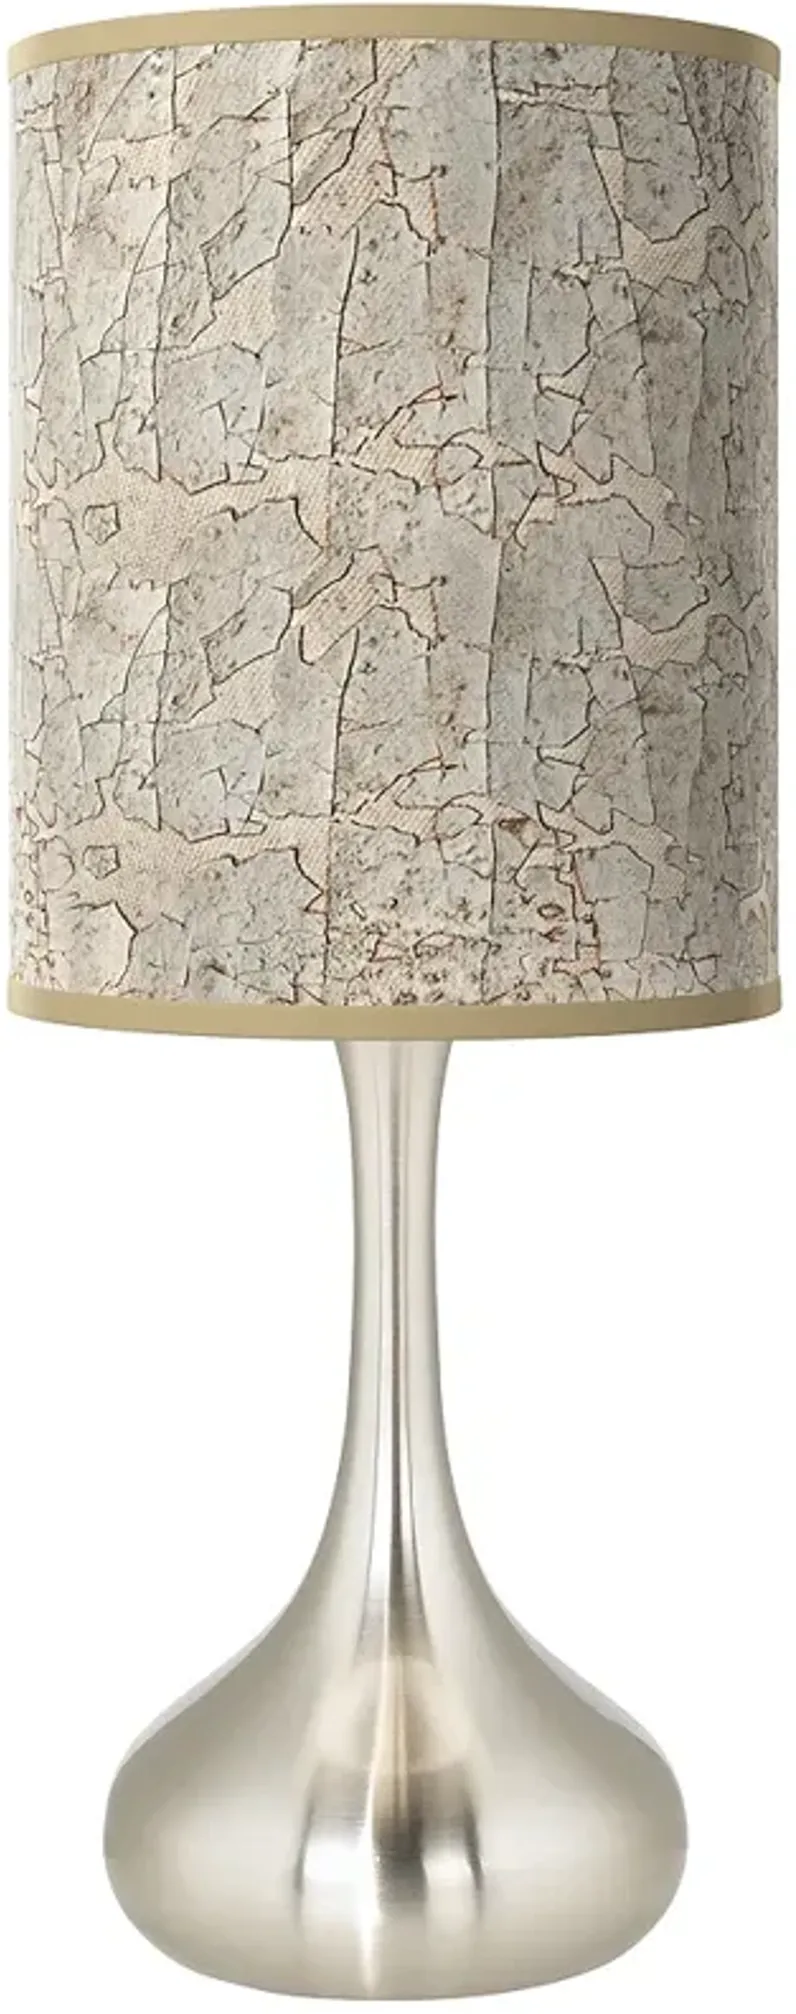 Al Fresco Giclee Droplet Table Lamp